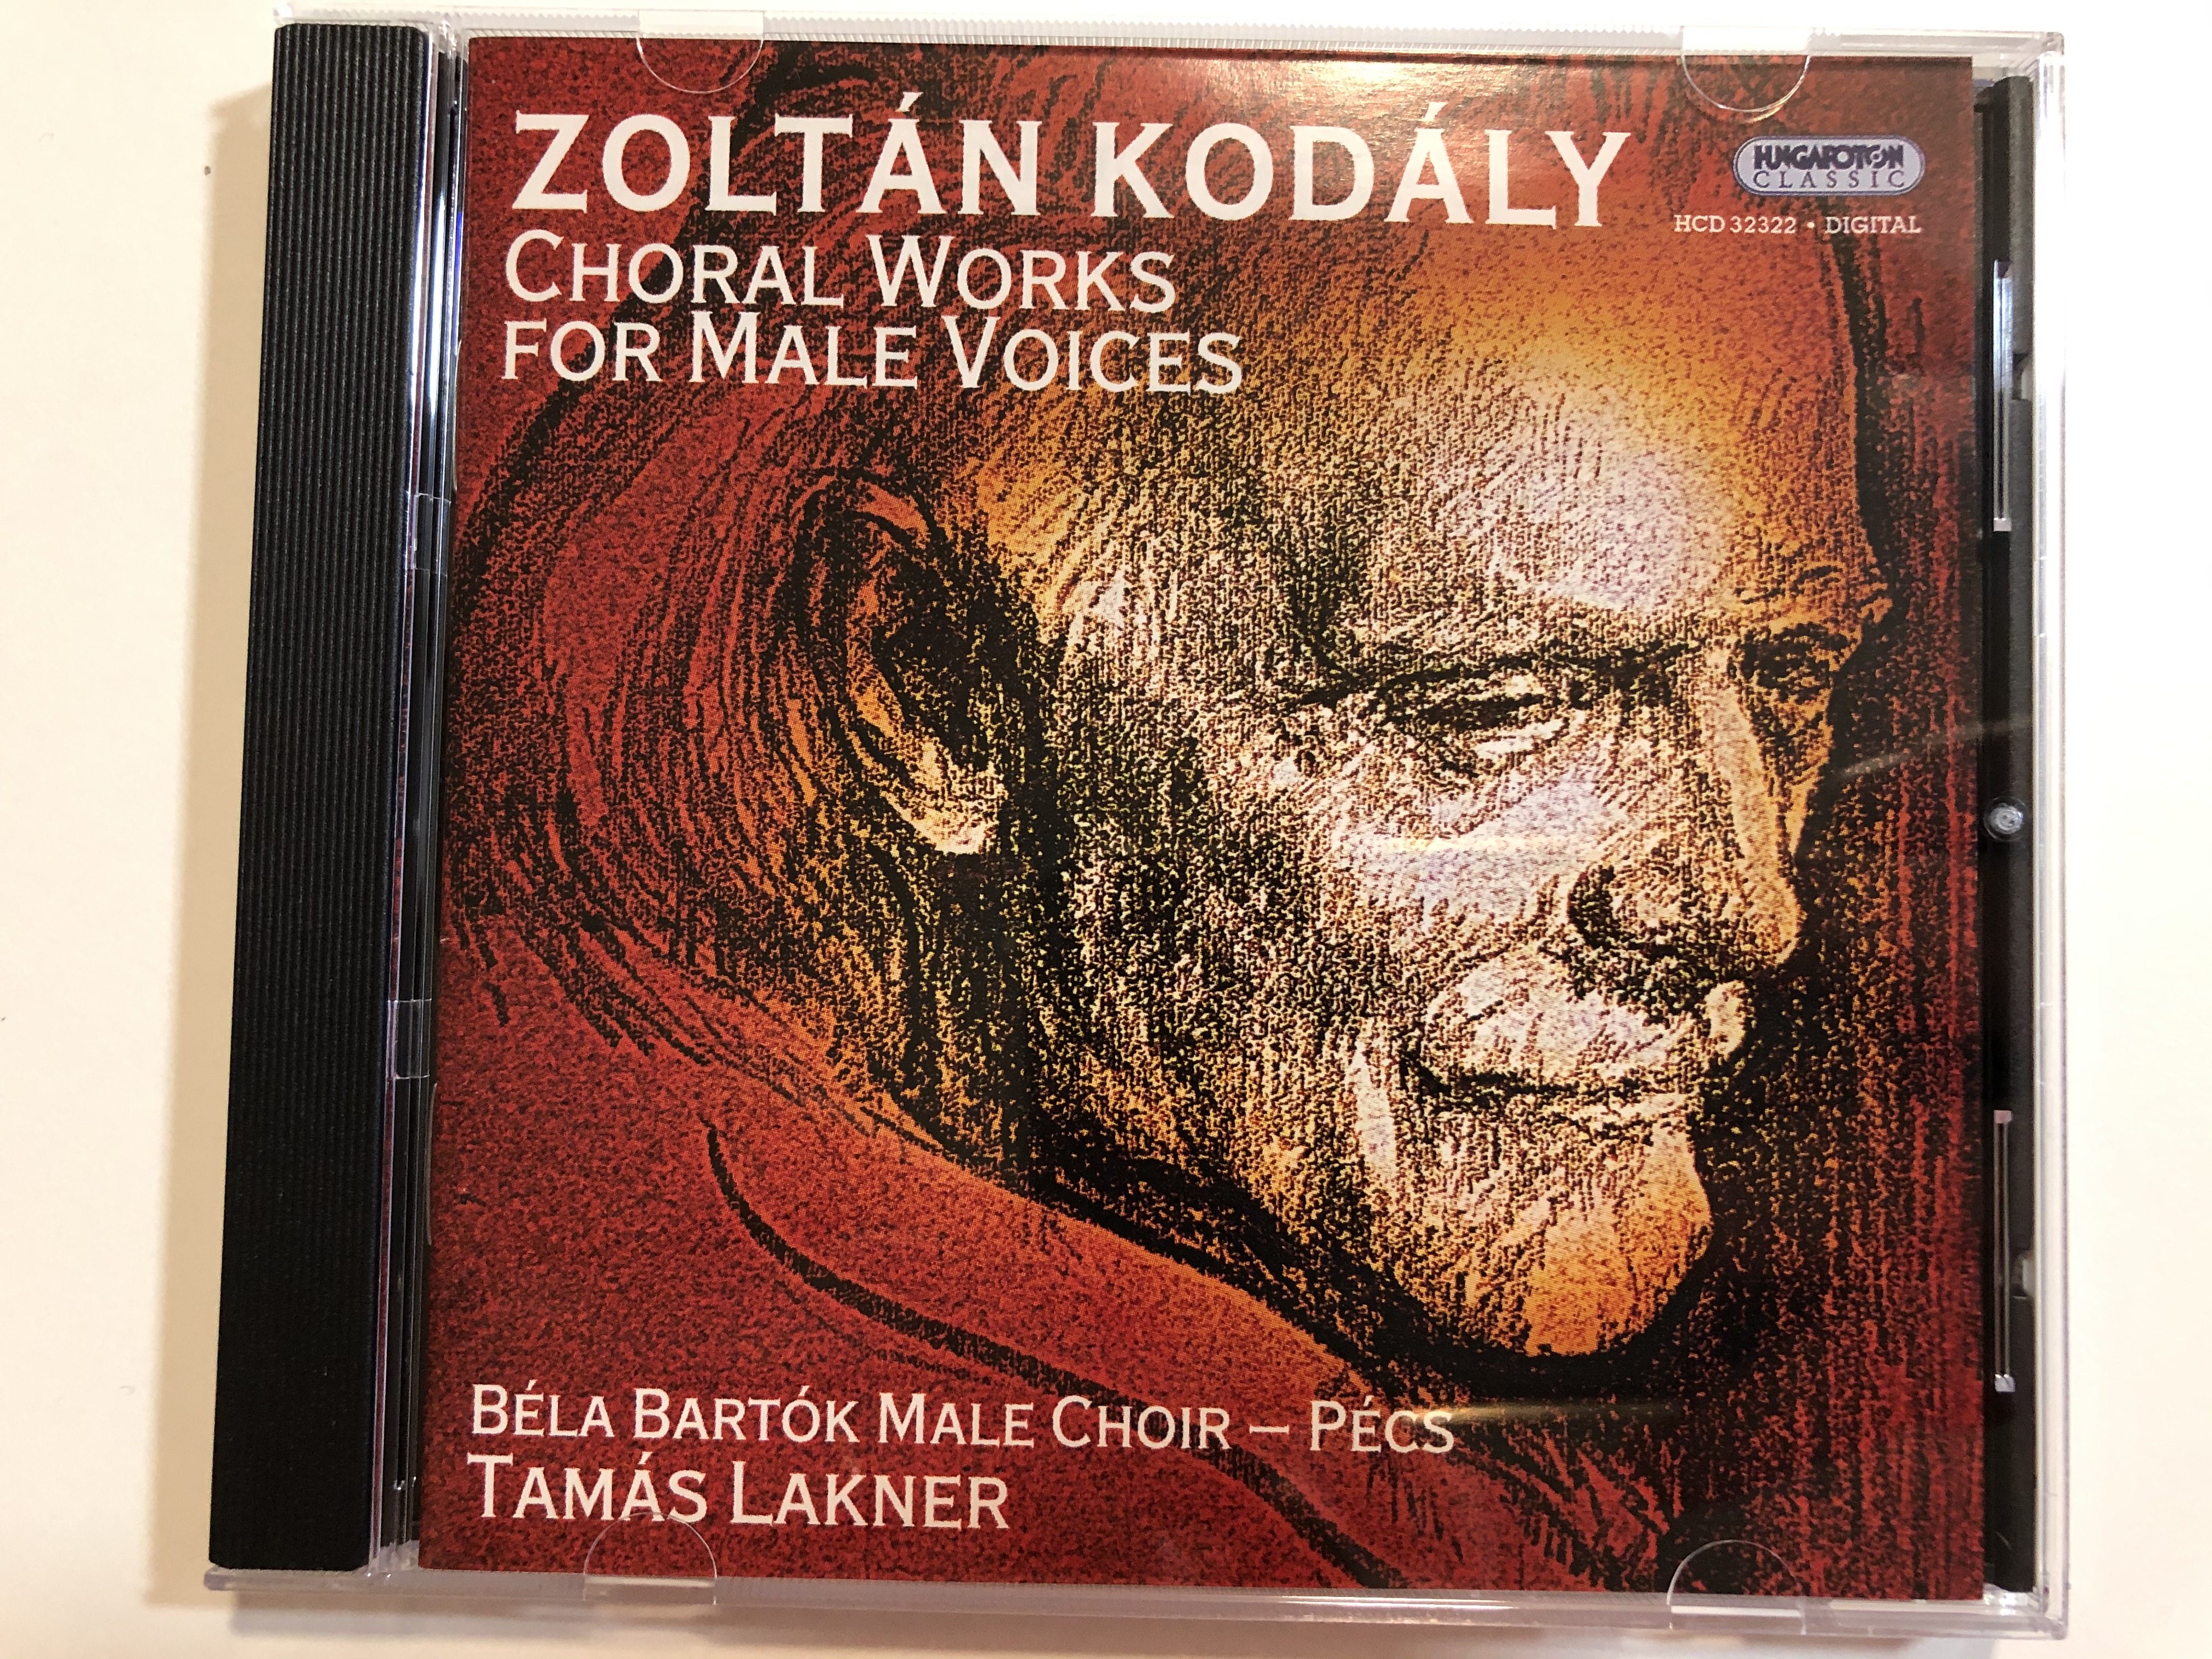 zoltan-kodaly-choral-works-for-male-voices-bela-bartok-male-choir-pecs-tamas-lakner-hungaroton-classic-audio-cd-2005-stereo-hcd-323222-1-.jpg